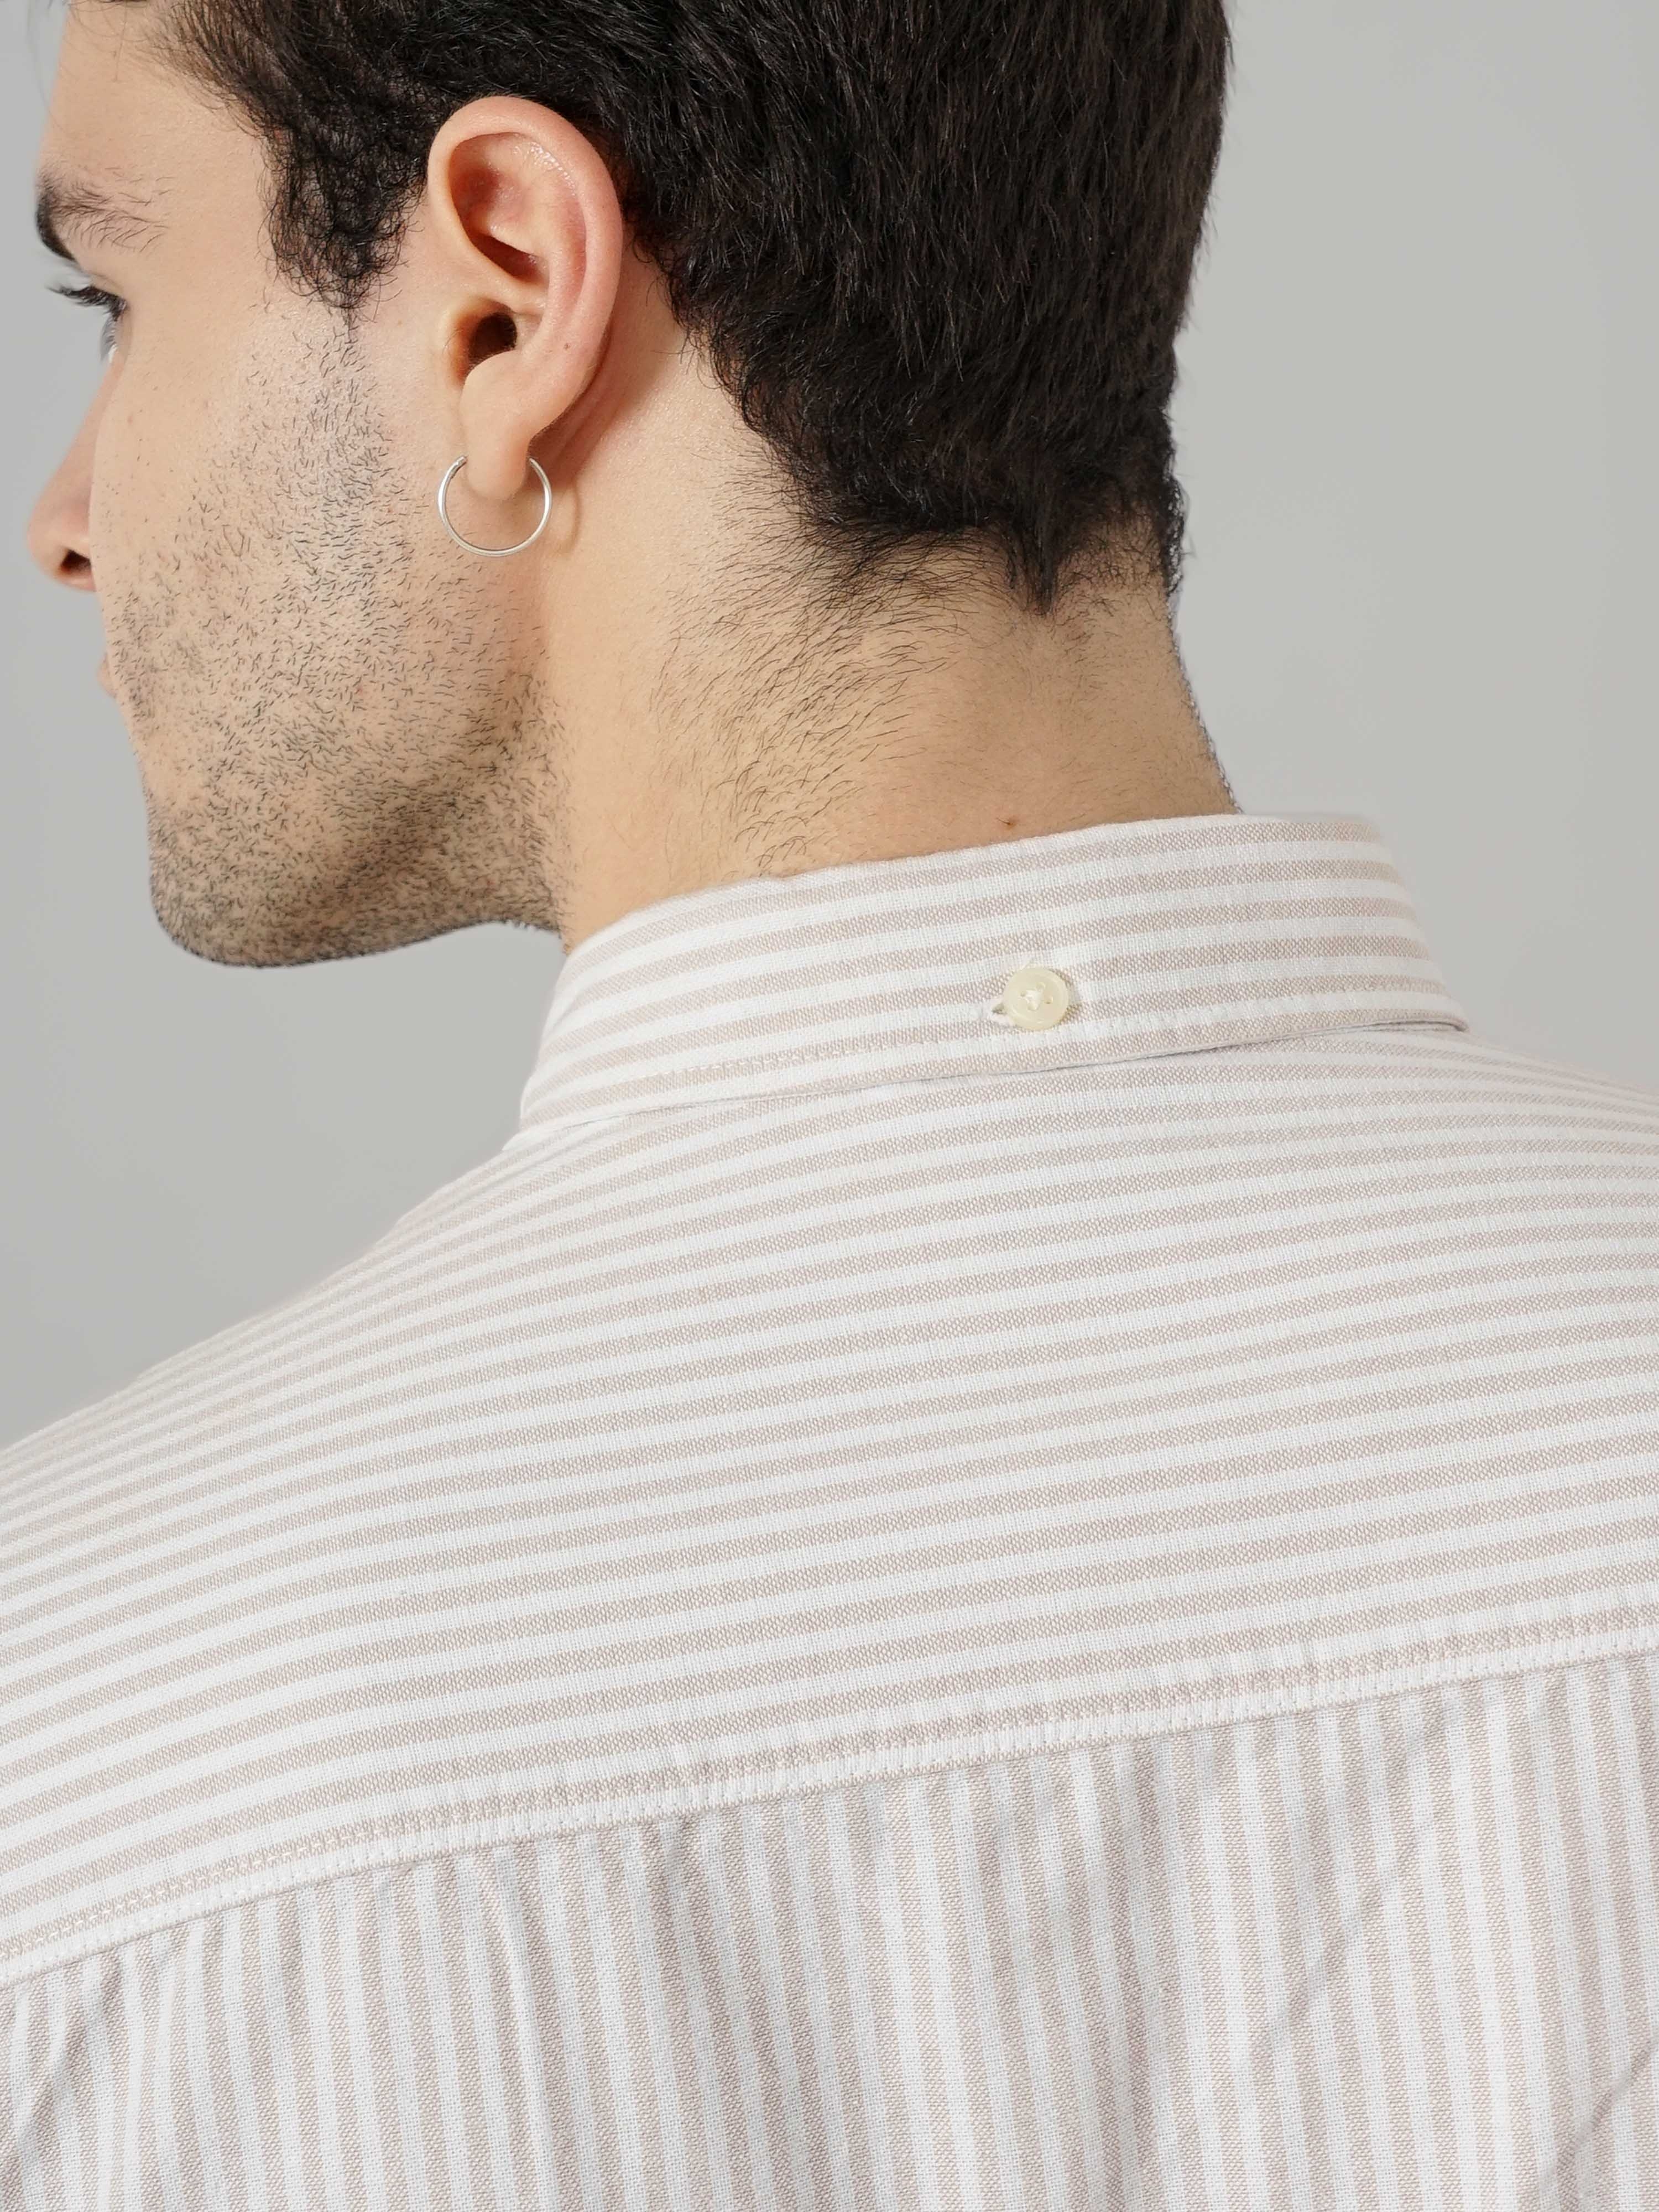 Celio Men Beige Striped Regular Fit Cotton Semi Formal Casual Shirt